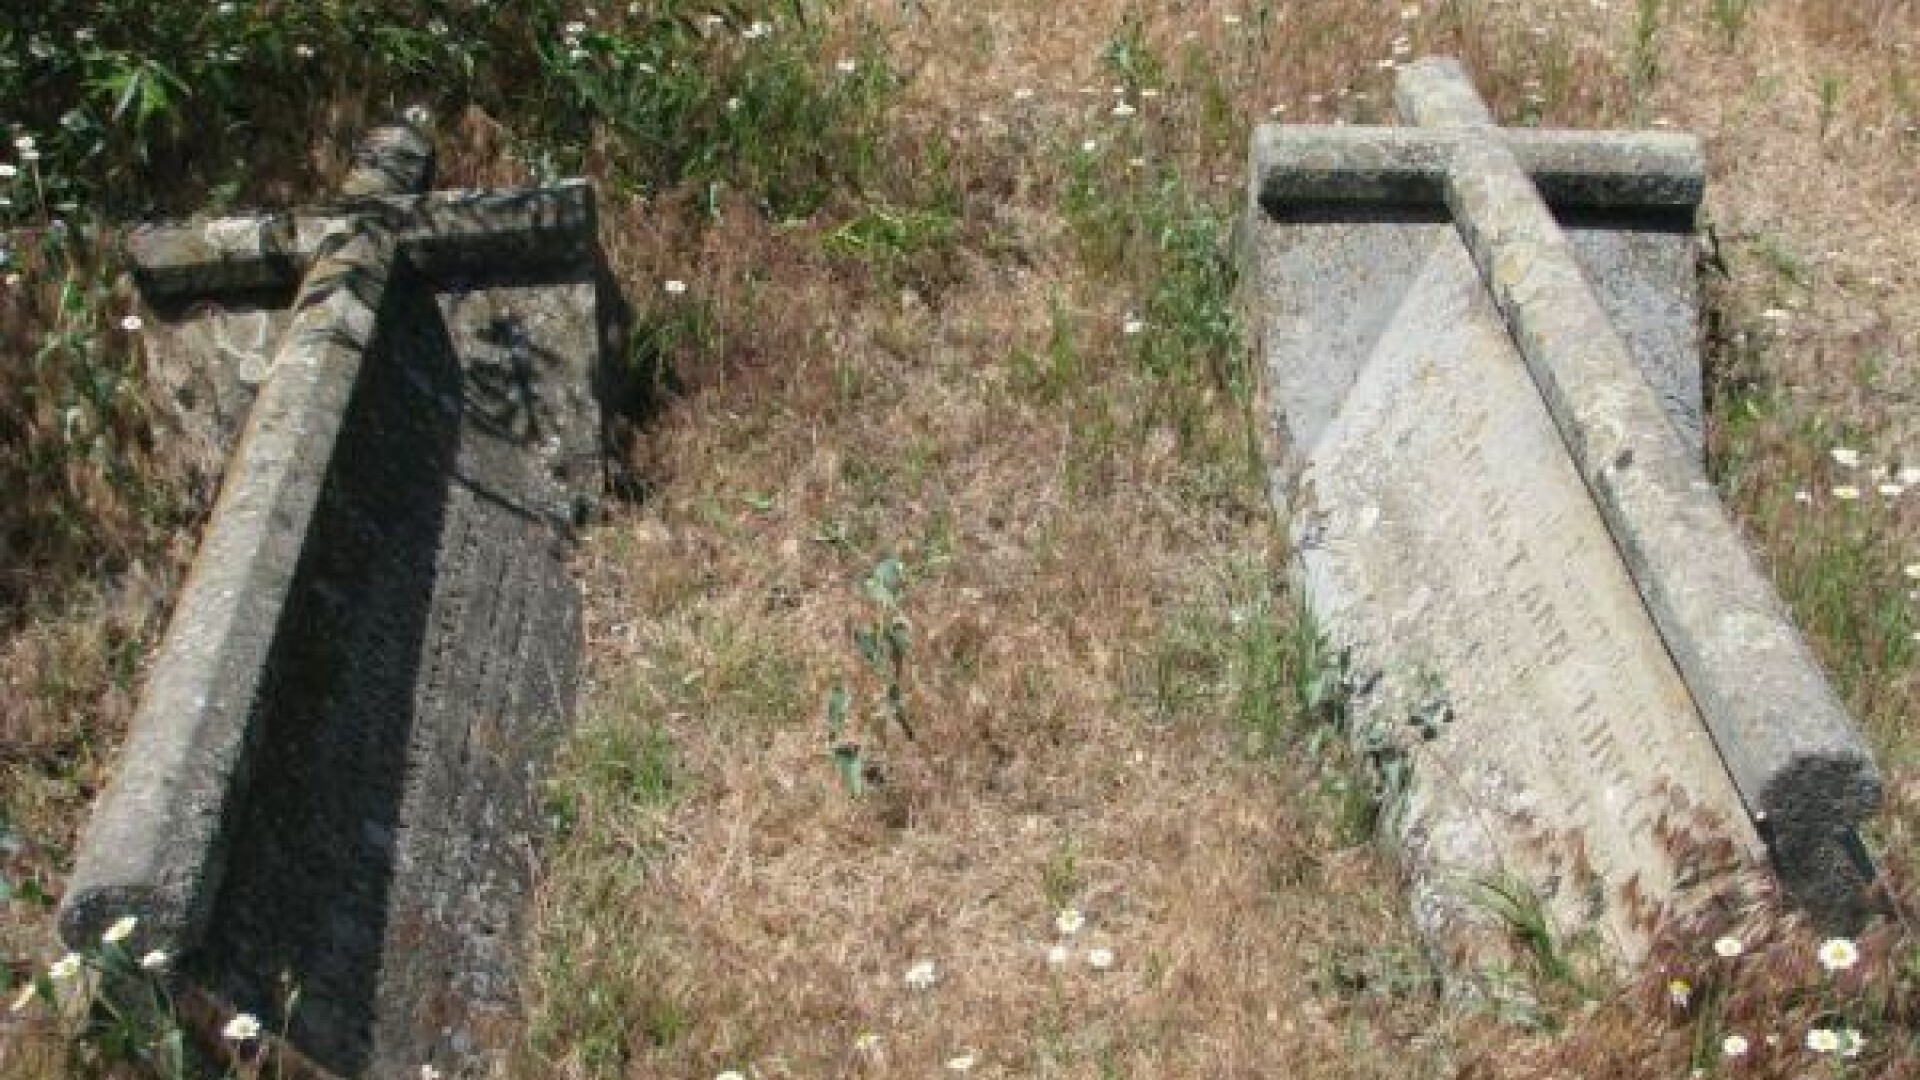 cimitir Sulina, mormant indragostiti, foto constanteanul.com